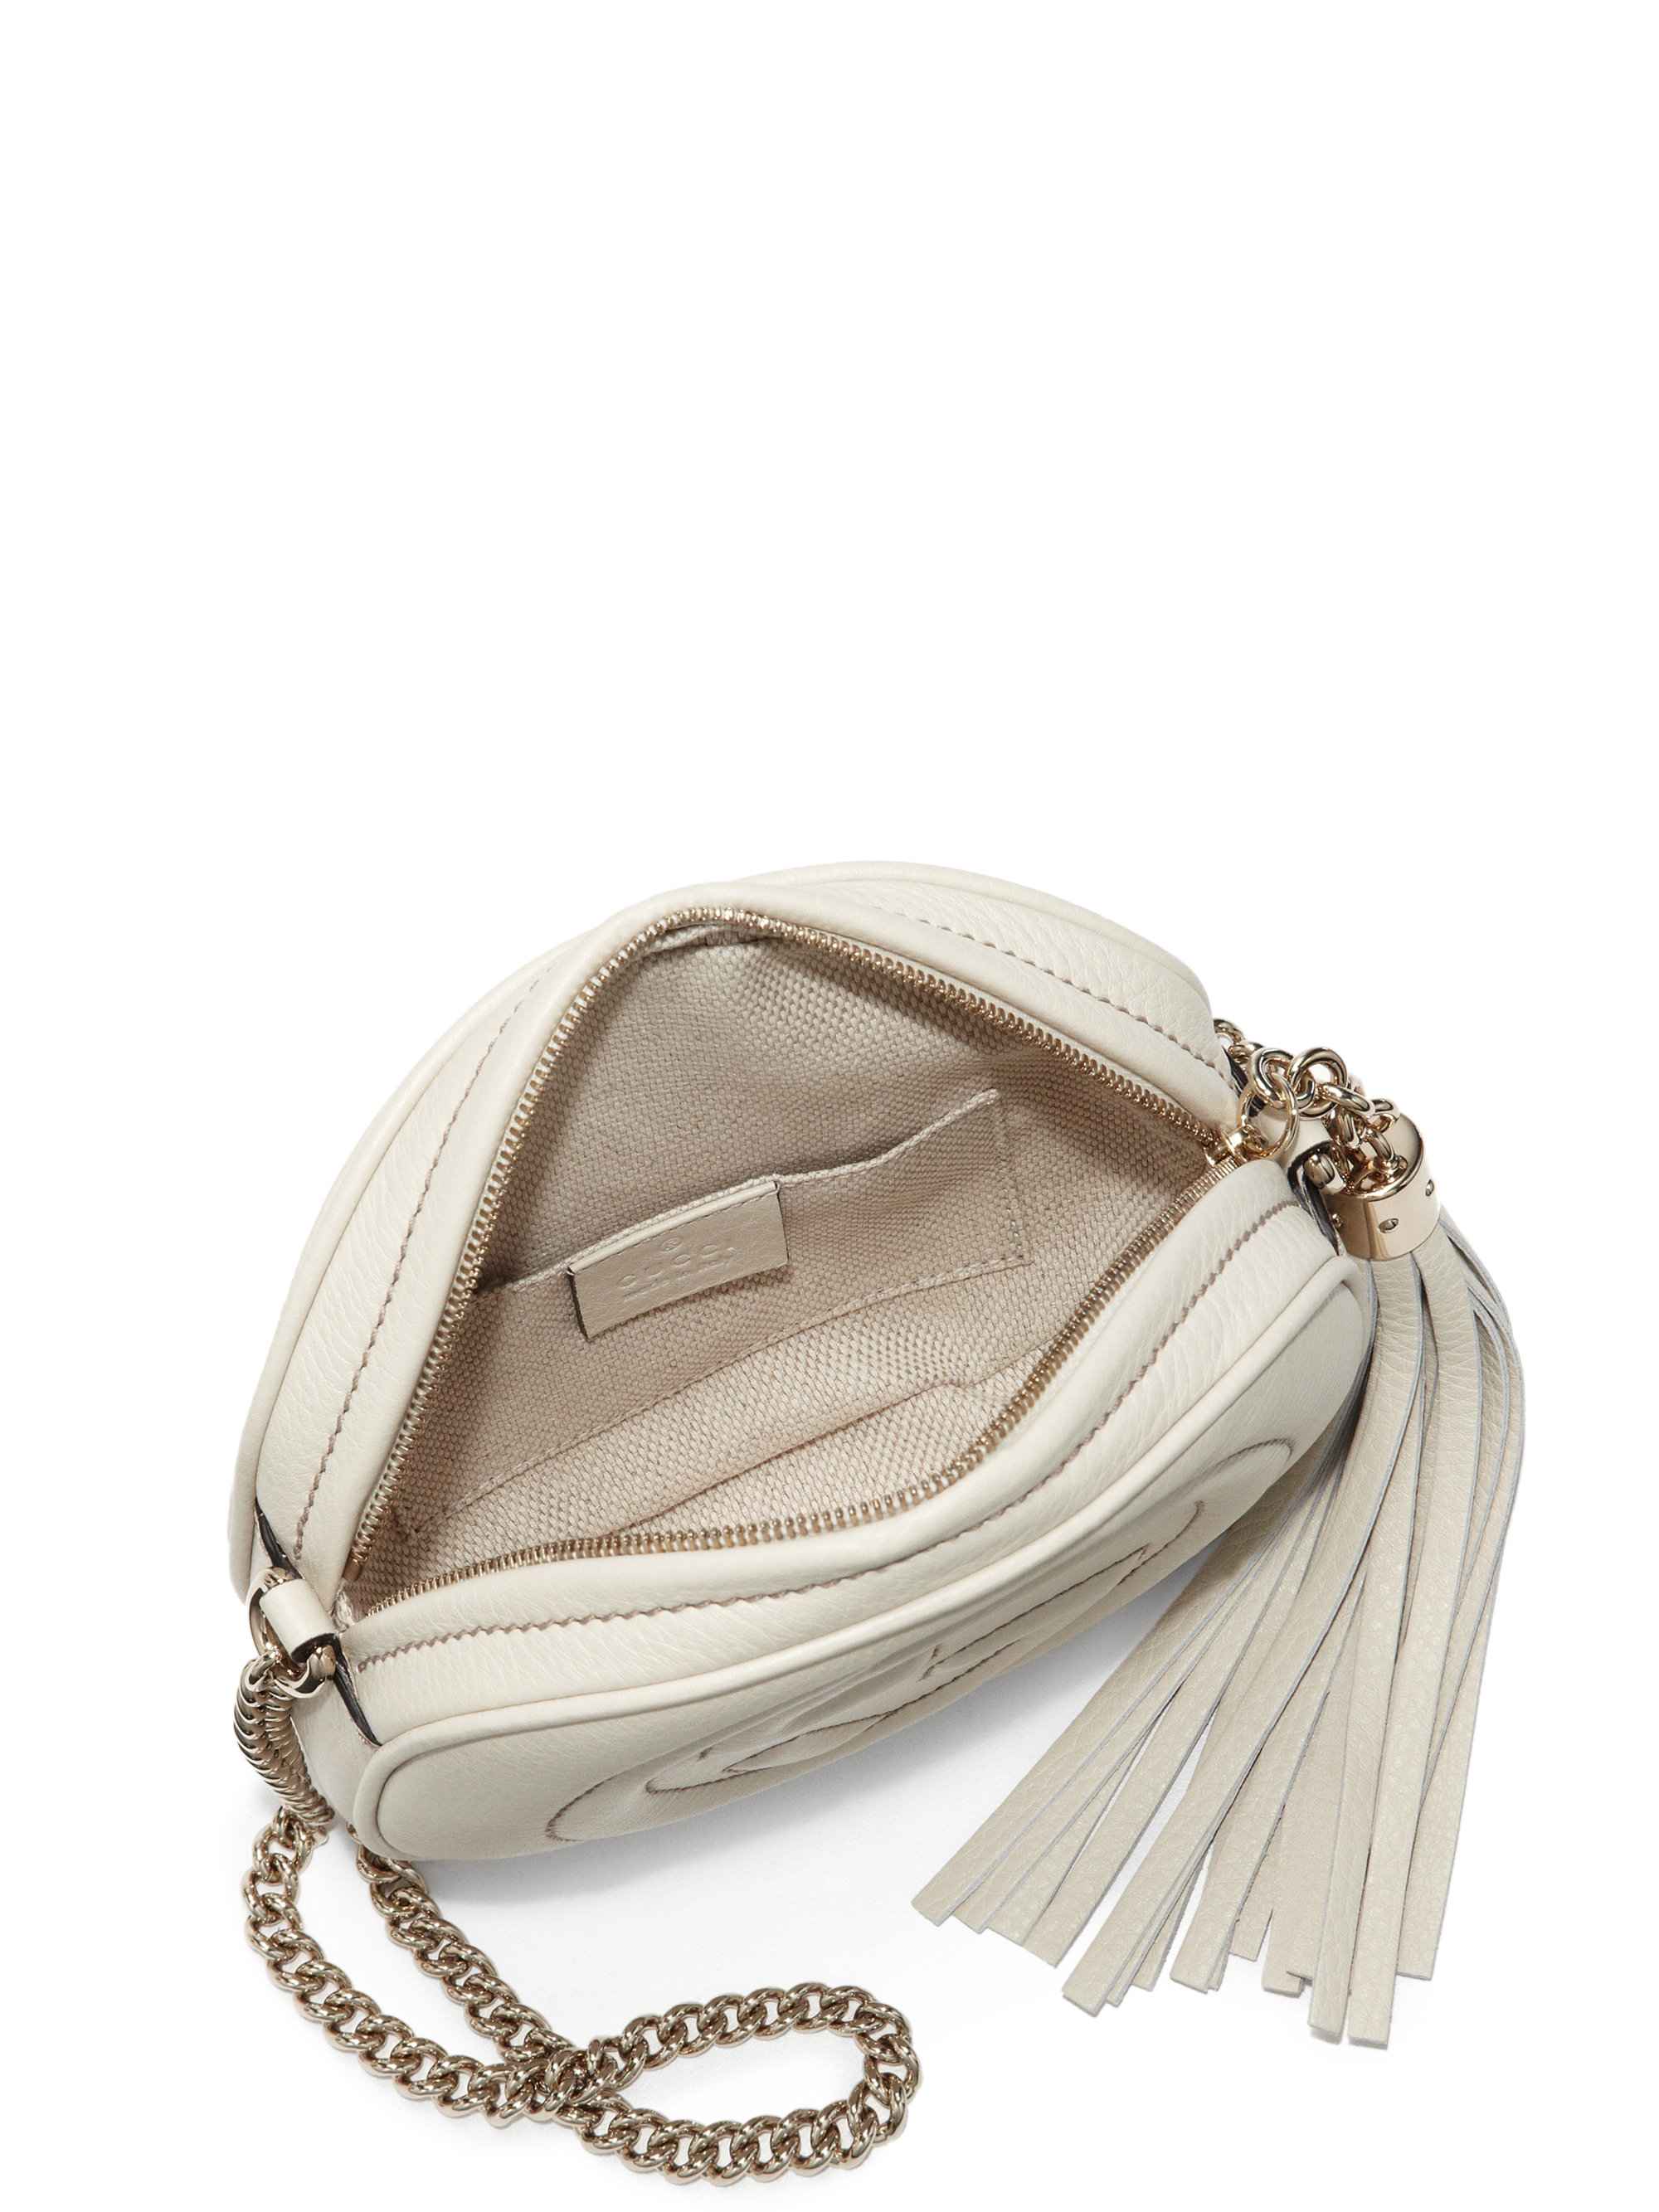 Gucci Soho Leather Mini Chain Bag in White | Lyst